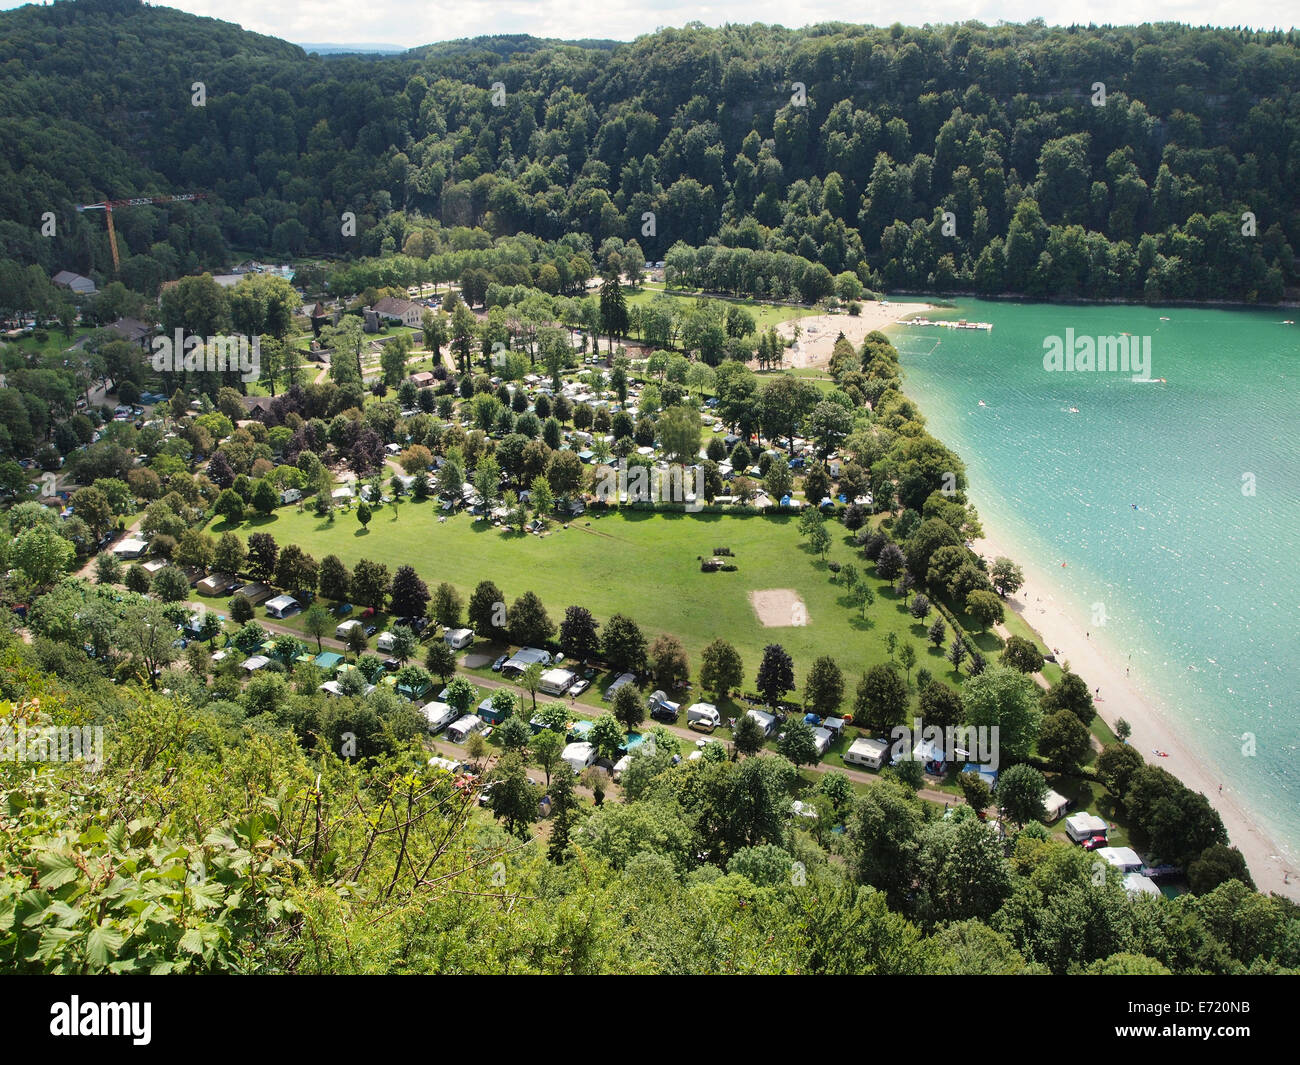 Campingplatz Domaine de Chalain am Lac de Chalain See, Jura, Frankreich  Stockfotografie - Alamy